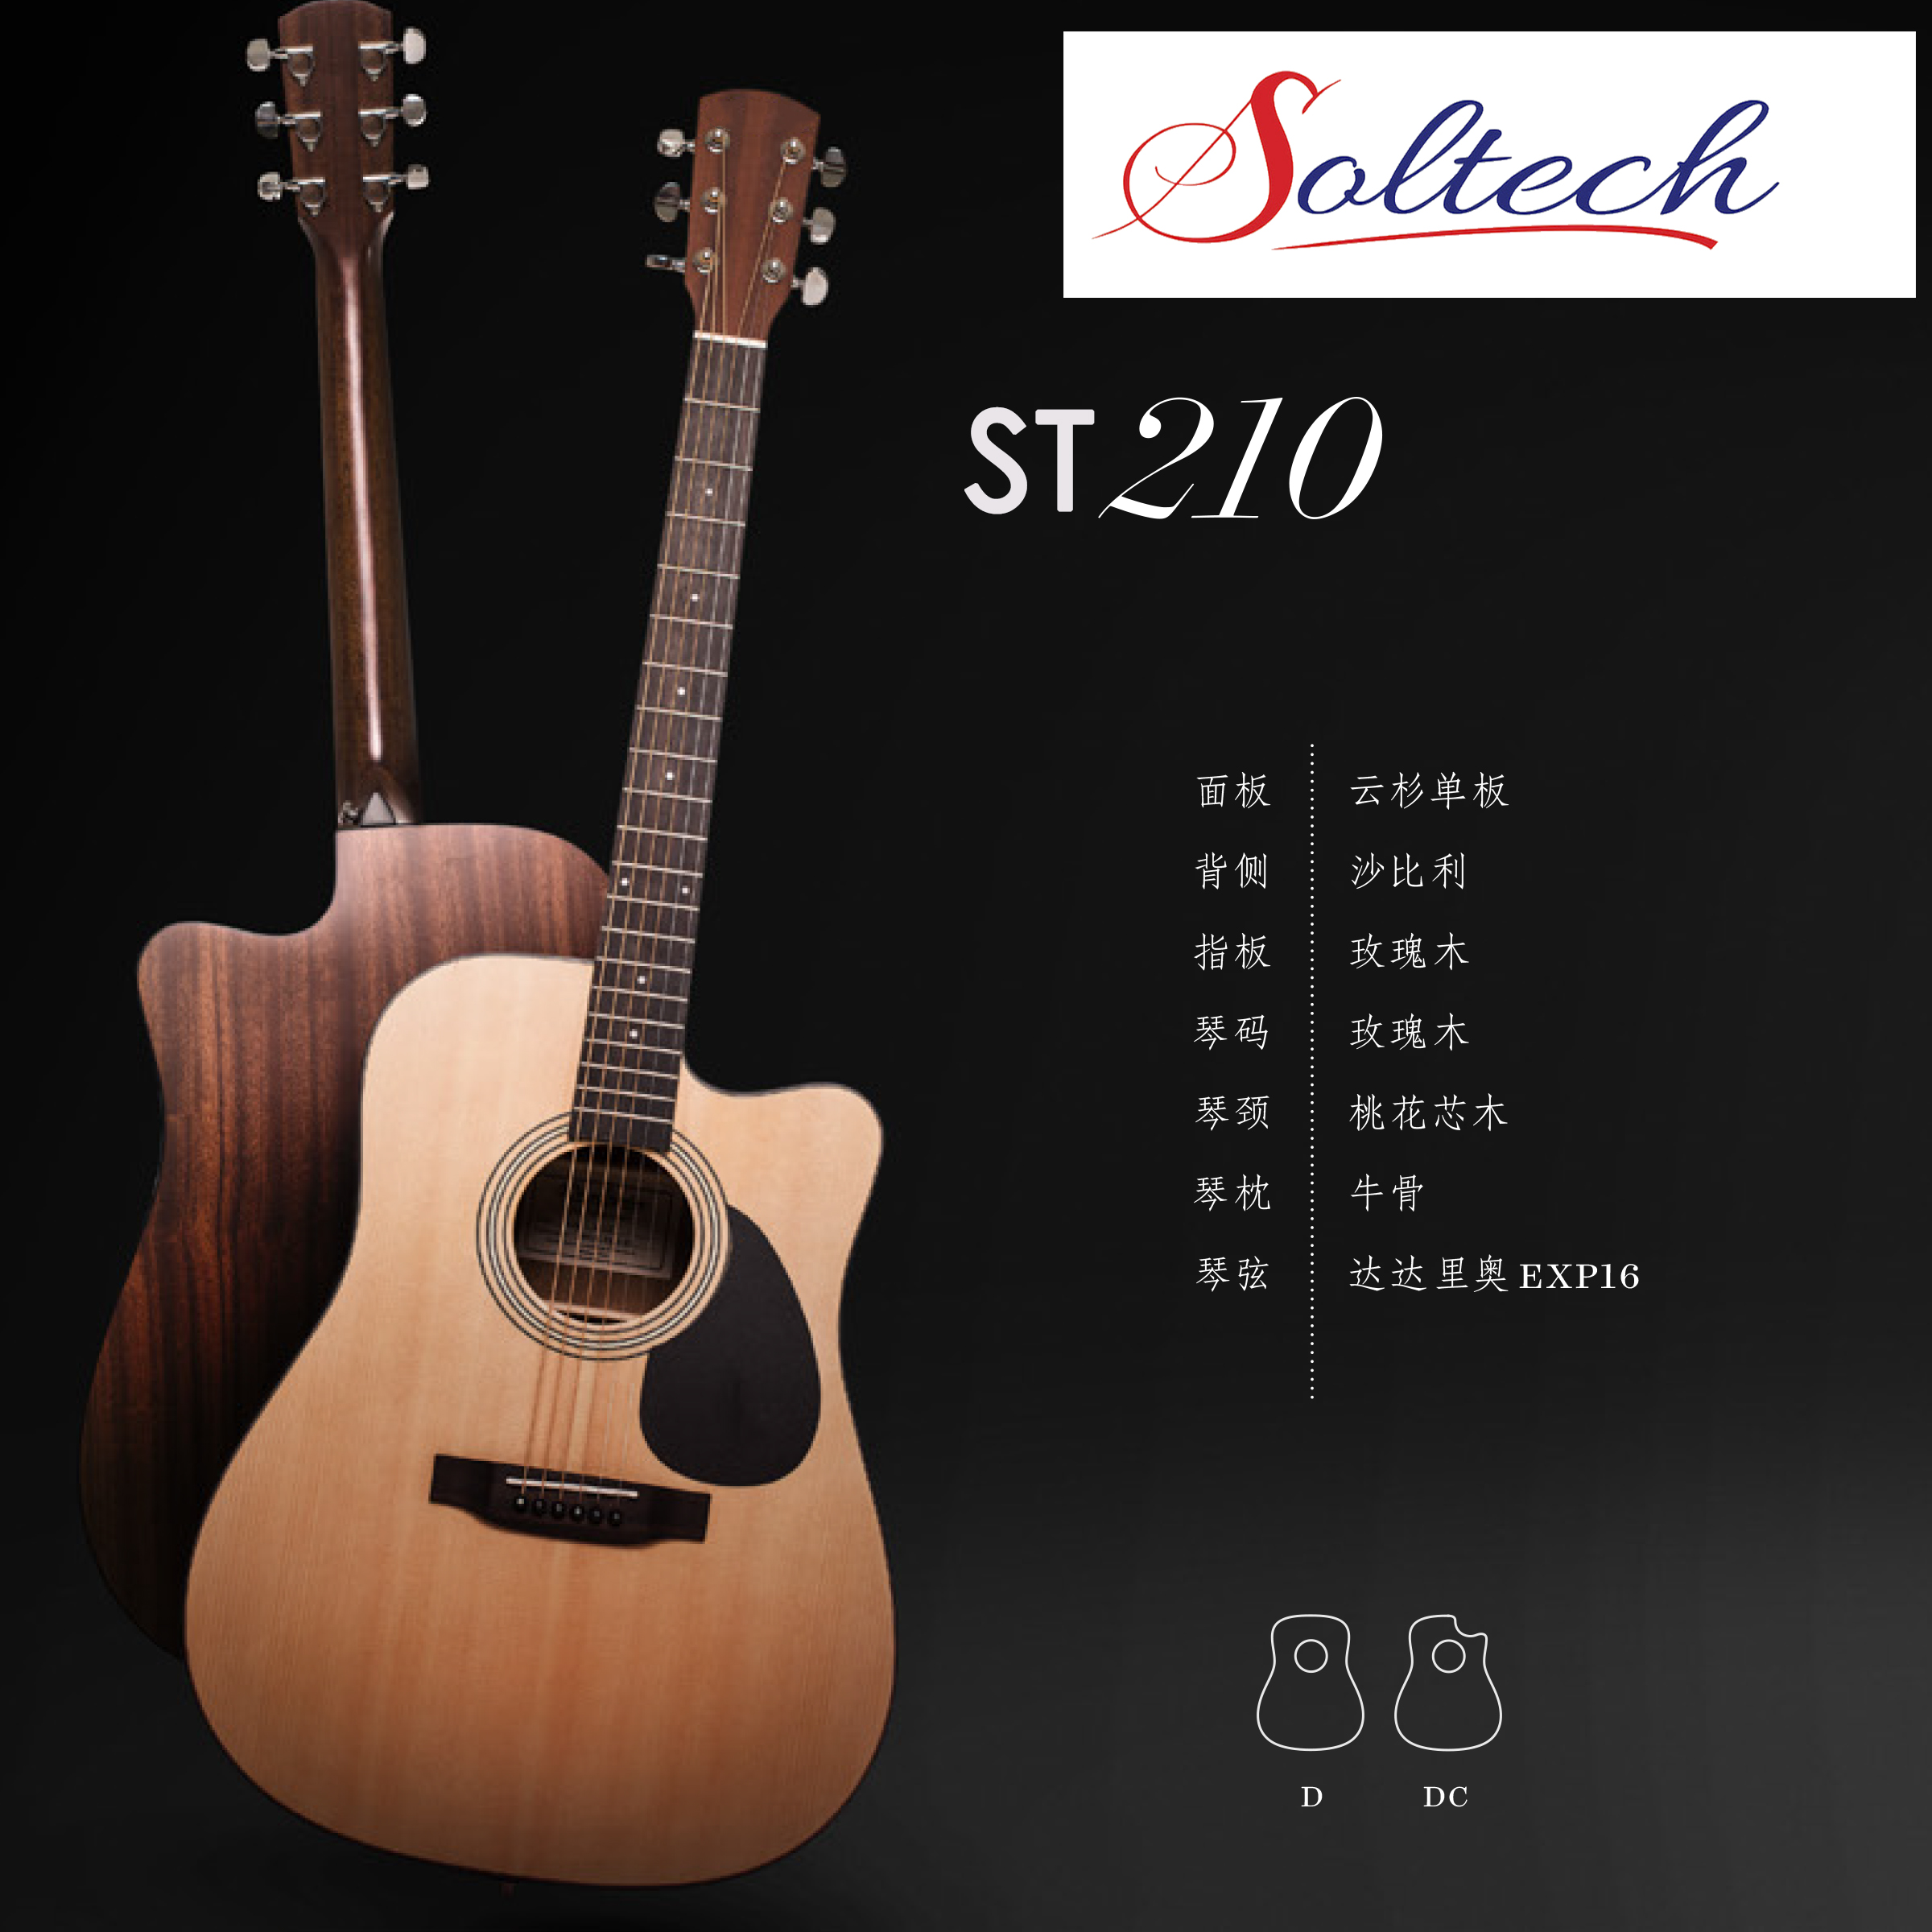 ST210 Acoustic Guitar with Sapele wood back - Guizhou Soltech 